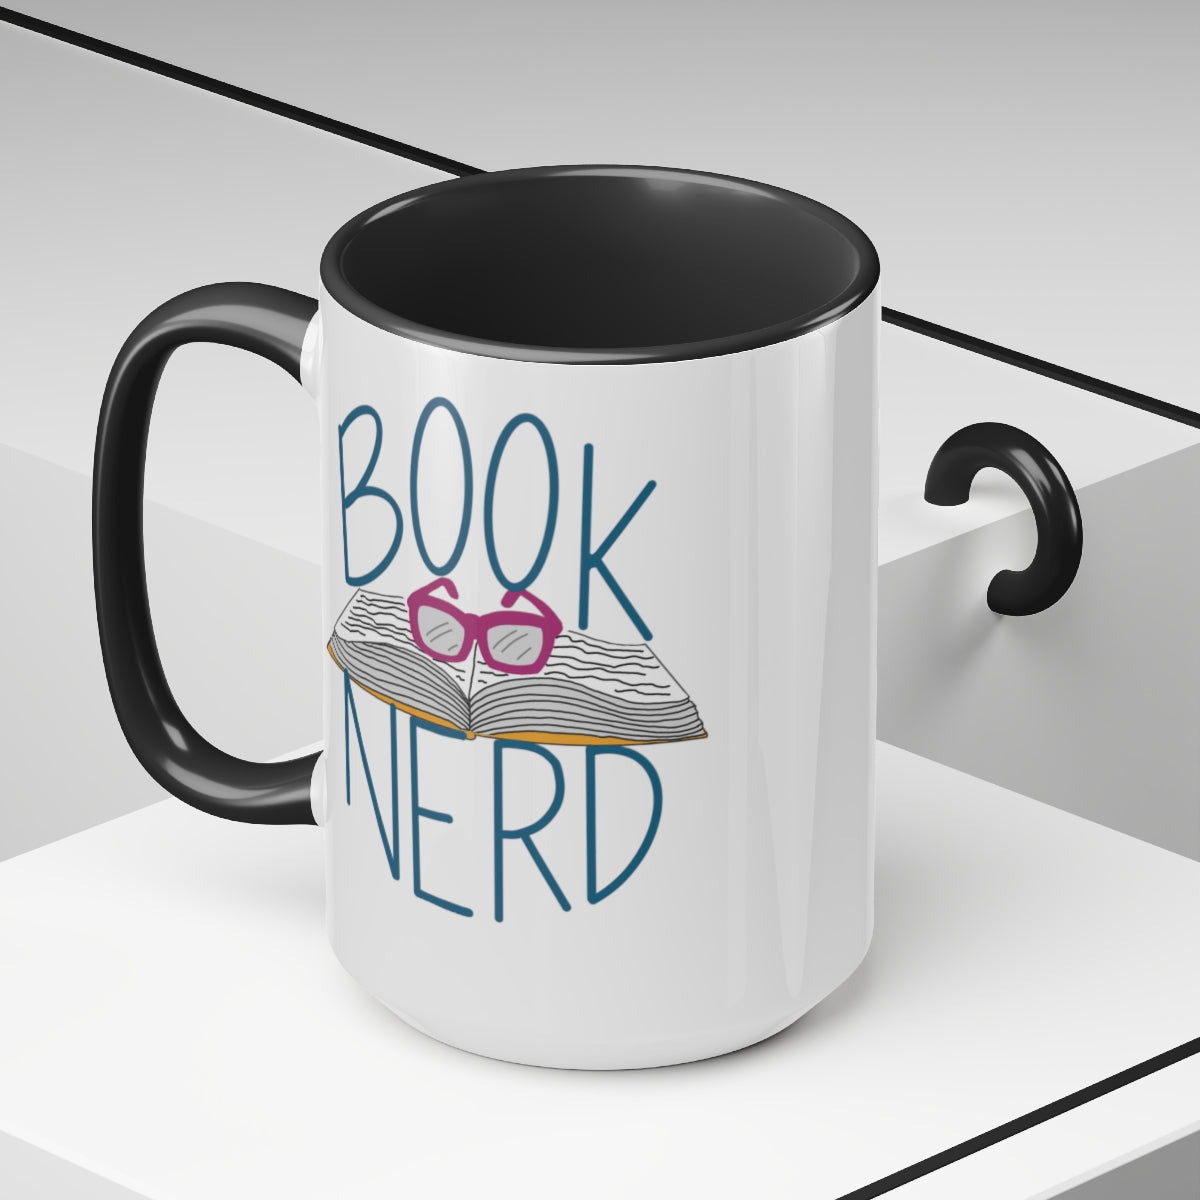 Book Nerd Accent Coffee Mug, 11oz (Blue and Black Accent)